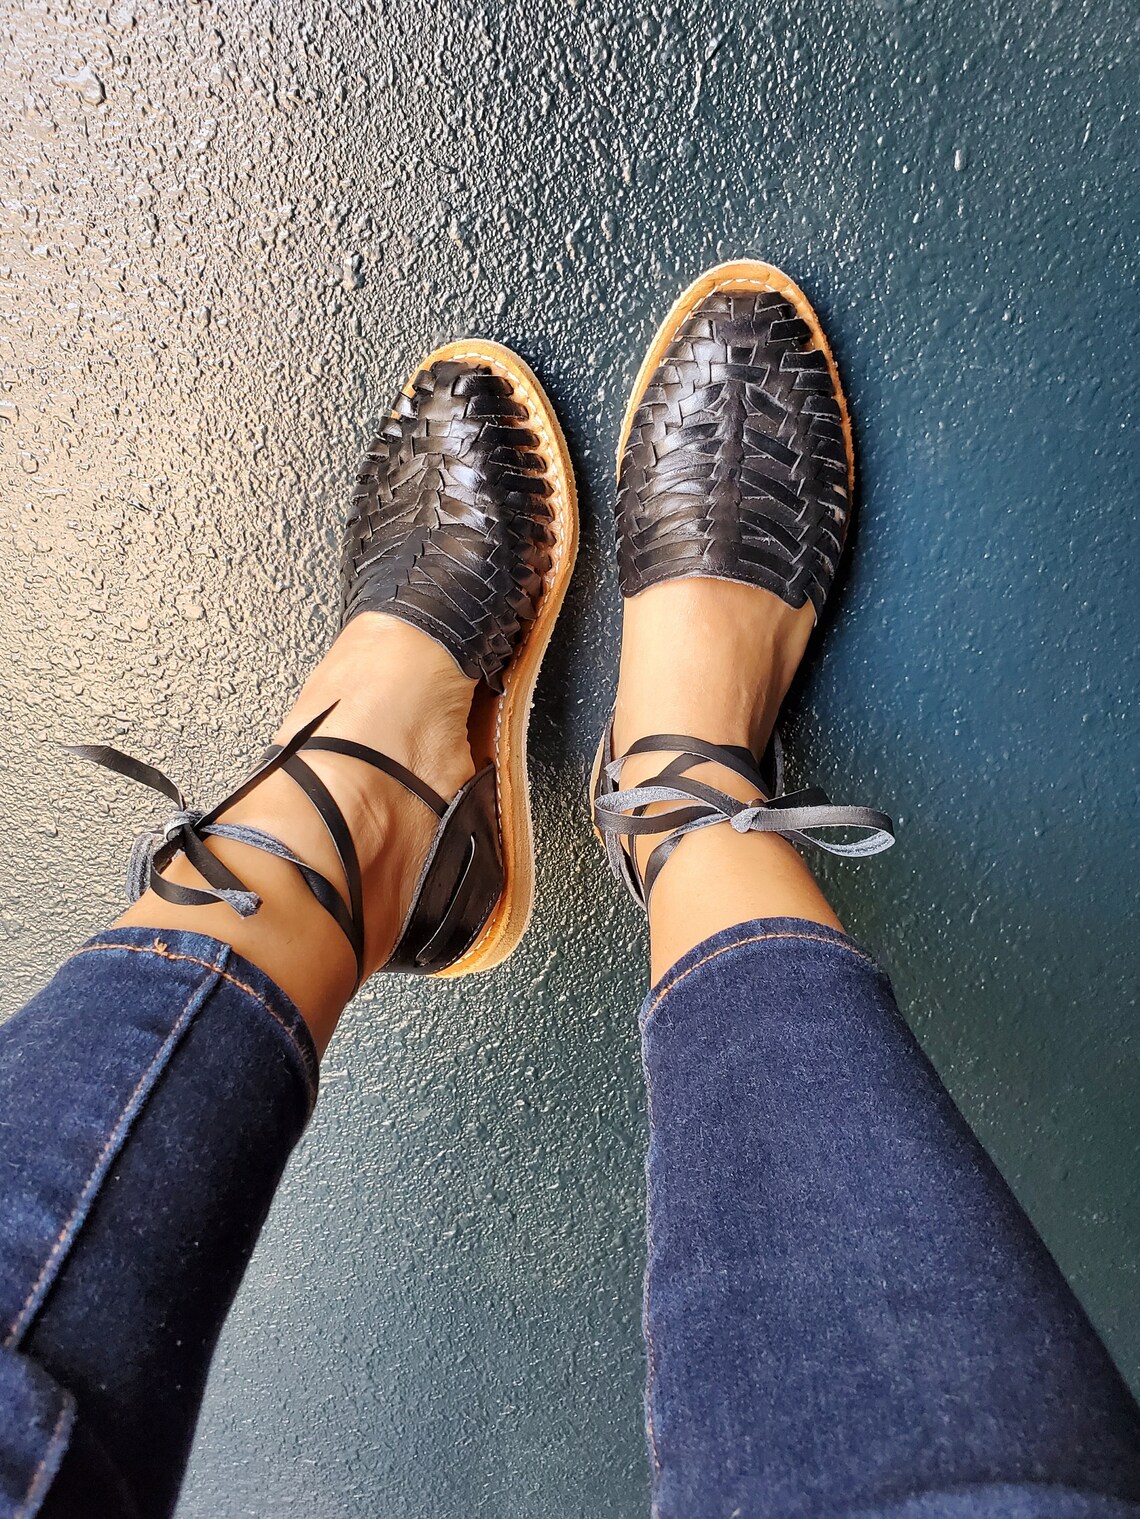 Huarache sandal Lace-up black /huarache shoe for woman | Etsy